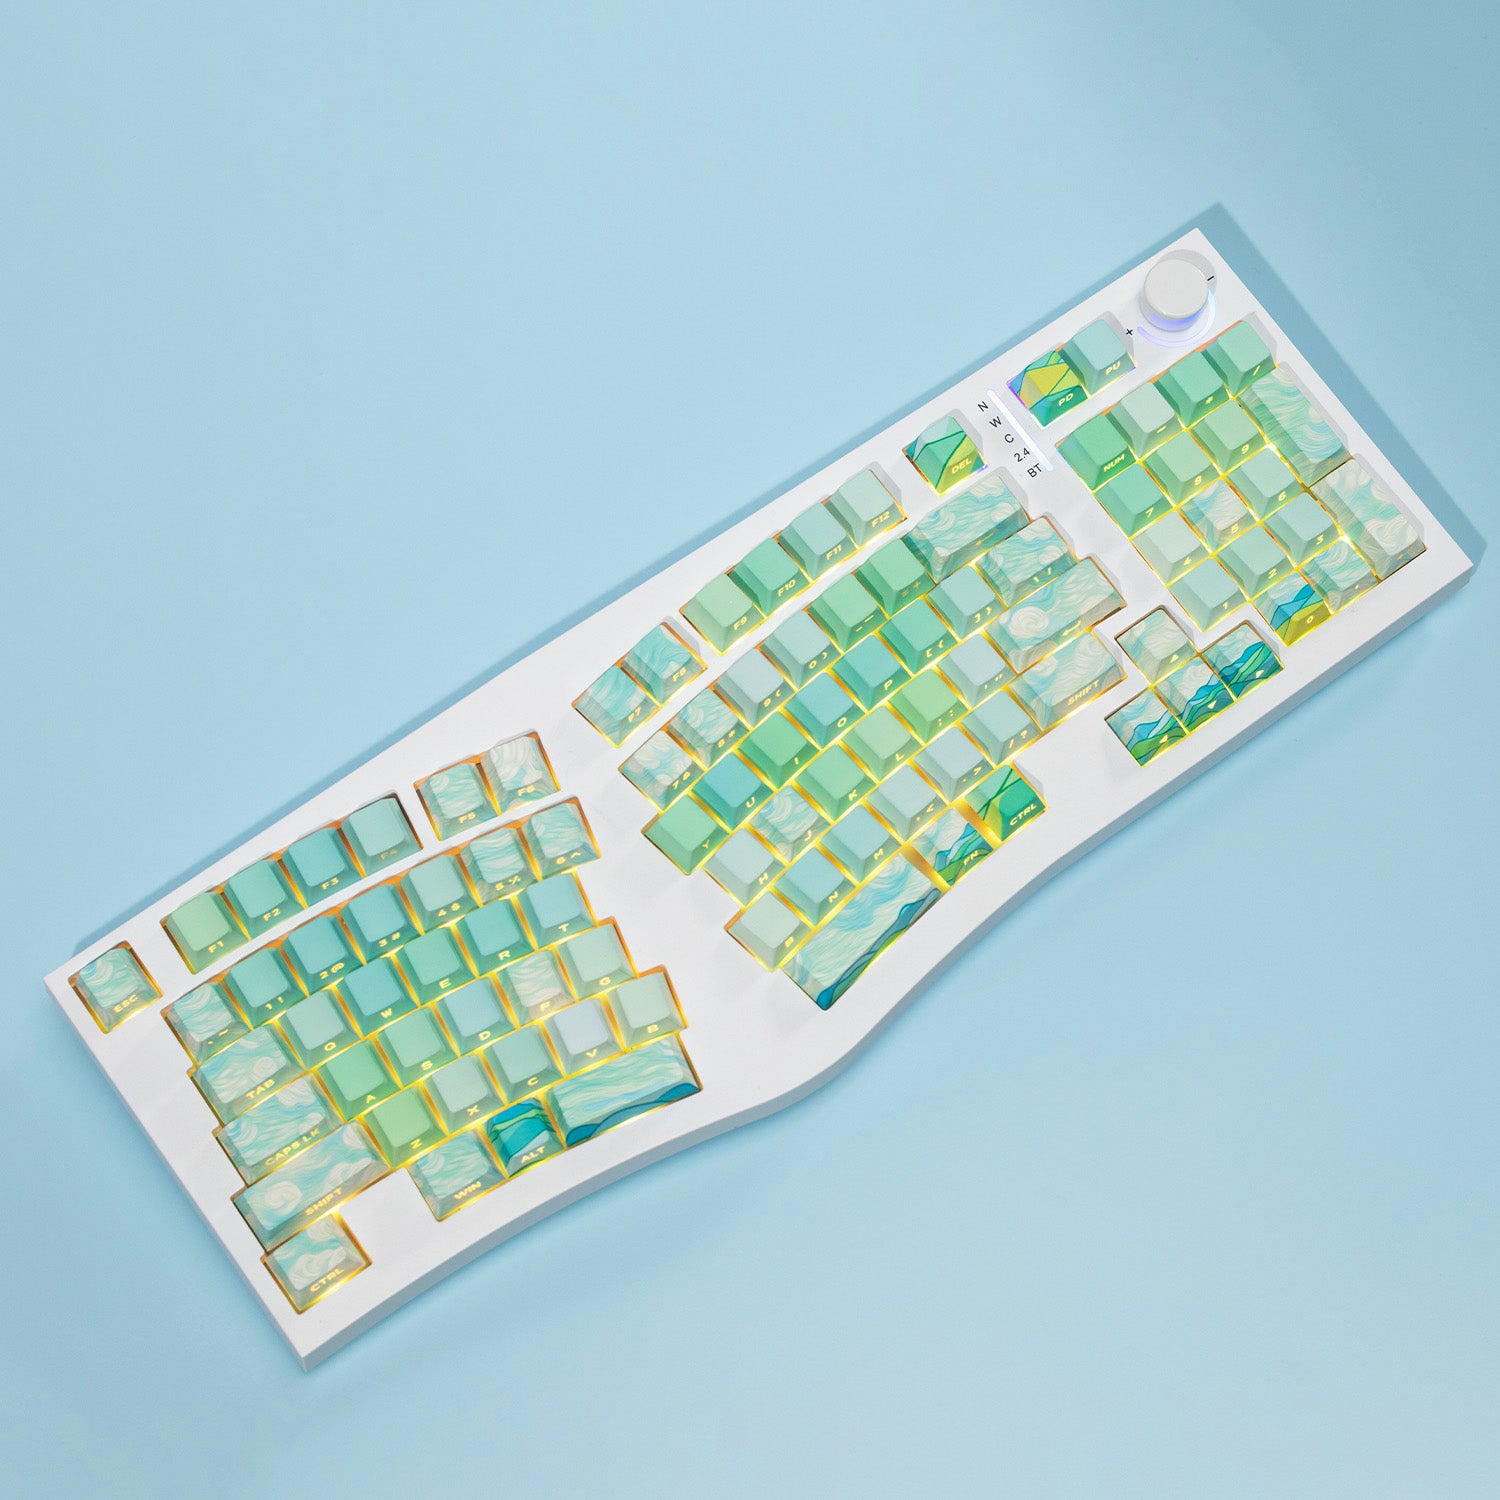 PIIFOX CKC-03 Green Wheat Field Pastel Painting Side-printed OEM Profile Keycap Set 135 Keys